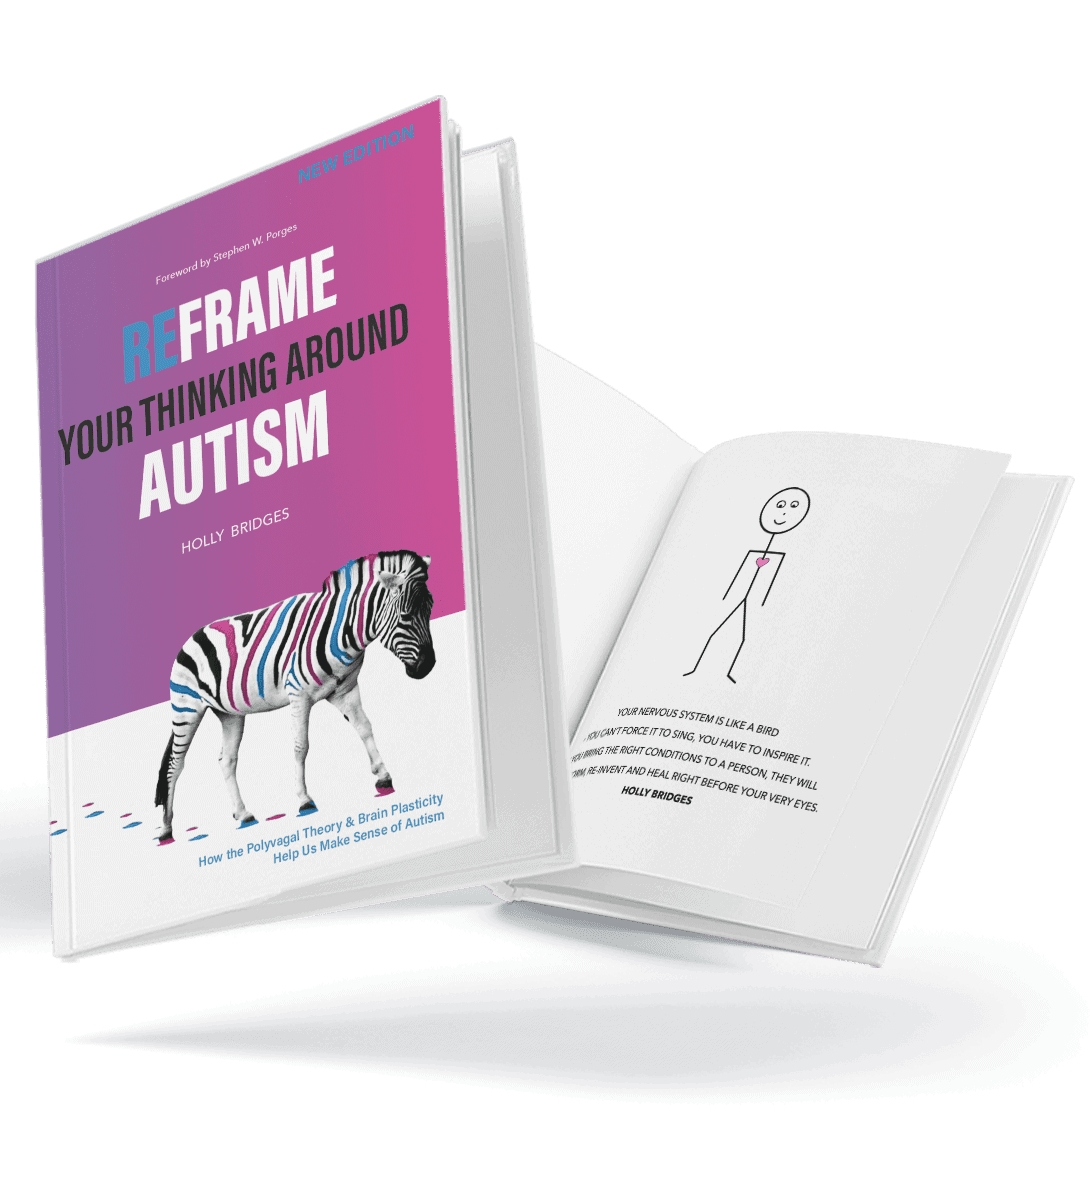 Reframe your thinking around autism book